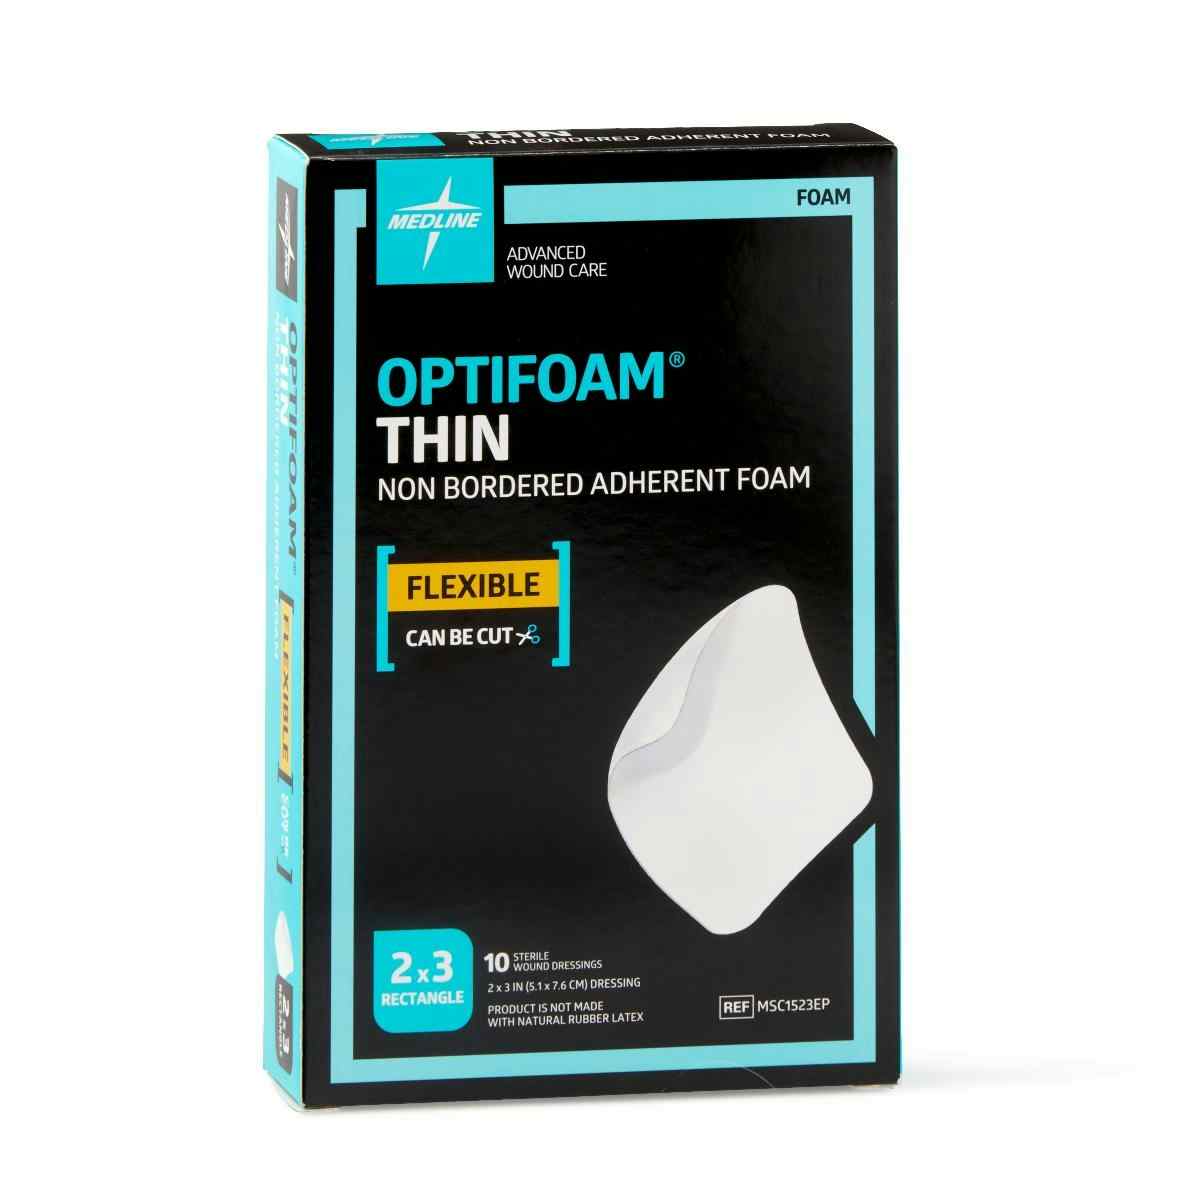 Medline Optifoam Thin Non Bordered Adhesive Foam Dressing